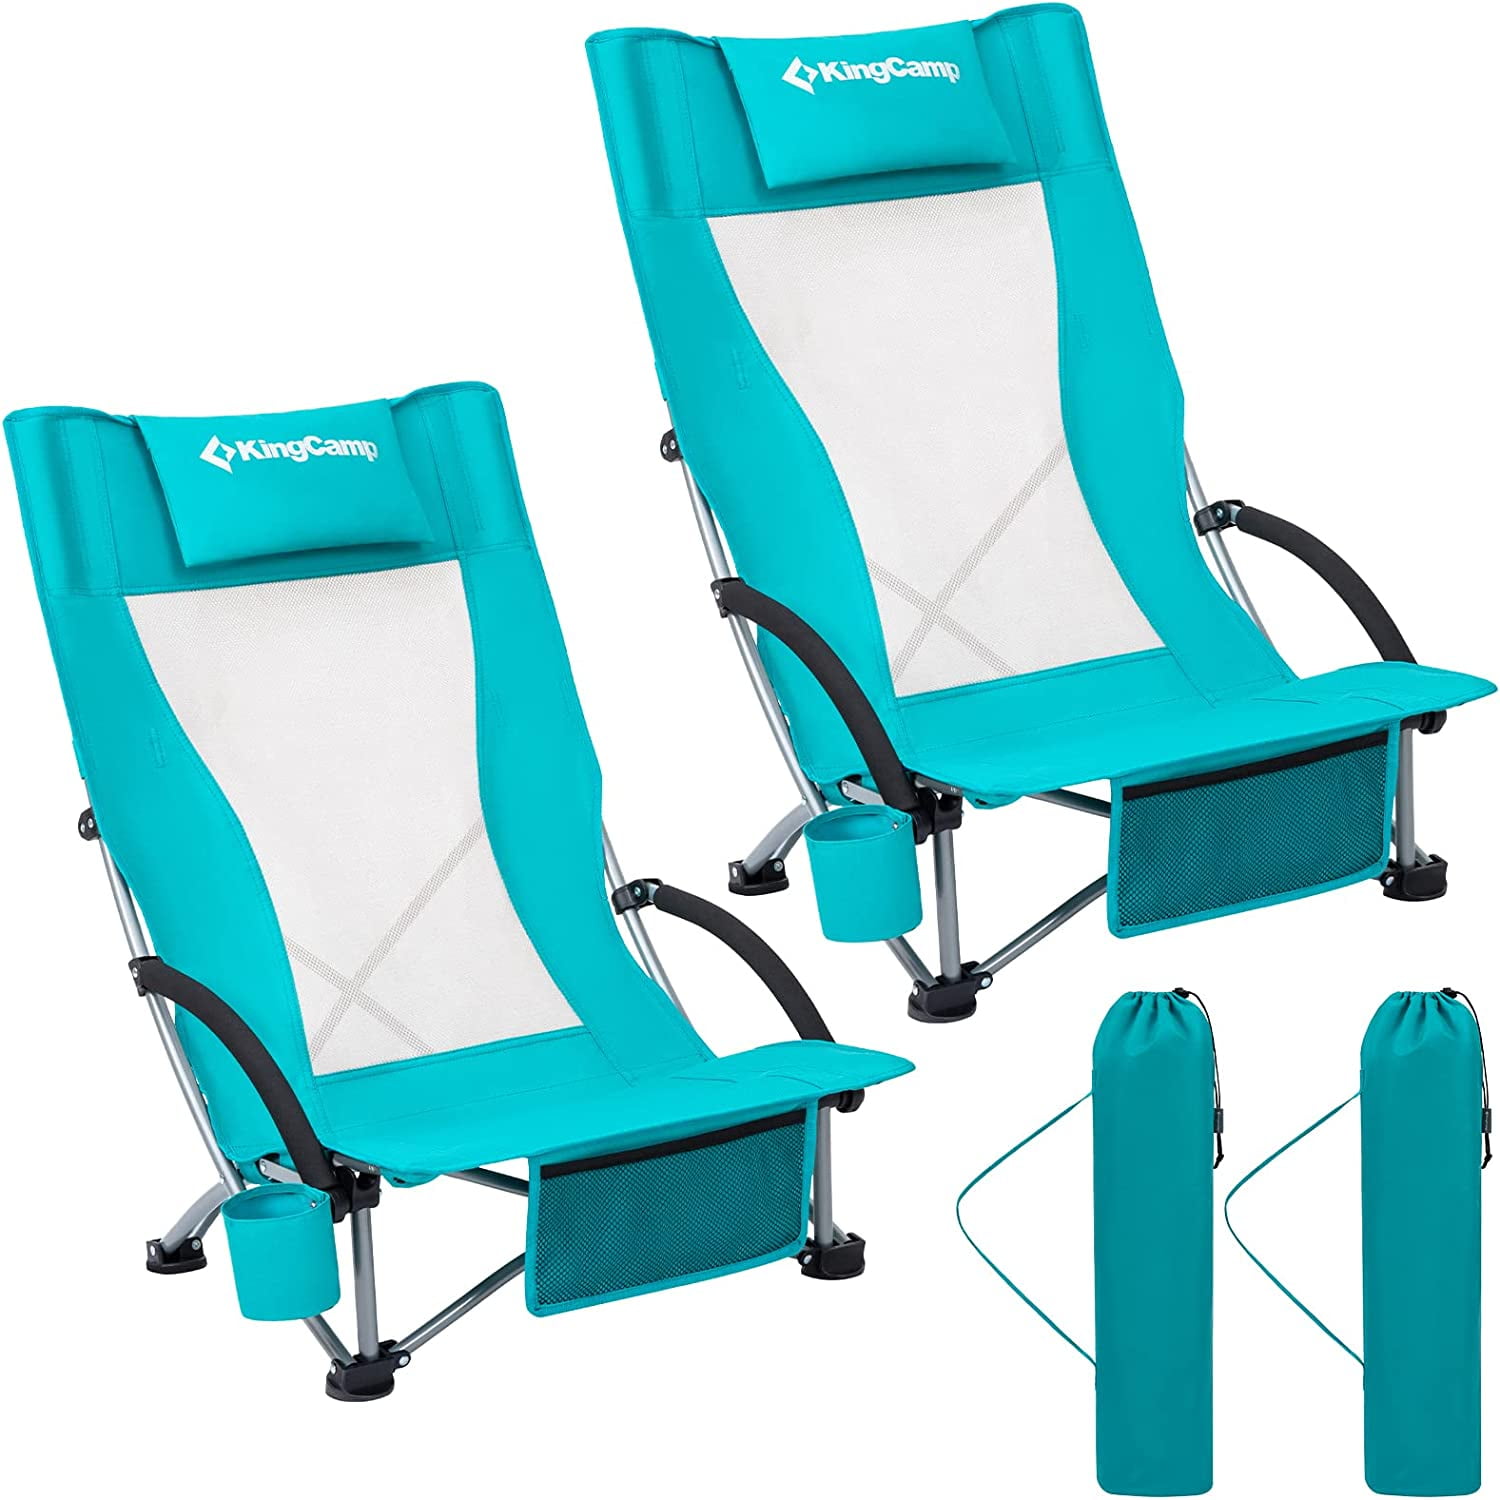 1-Pair Outdoor Garden Patio Sport Hiking Camping Beach Chair Folding Arm Chairs 